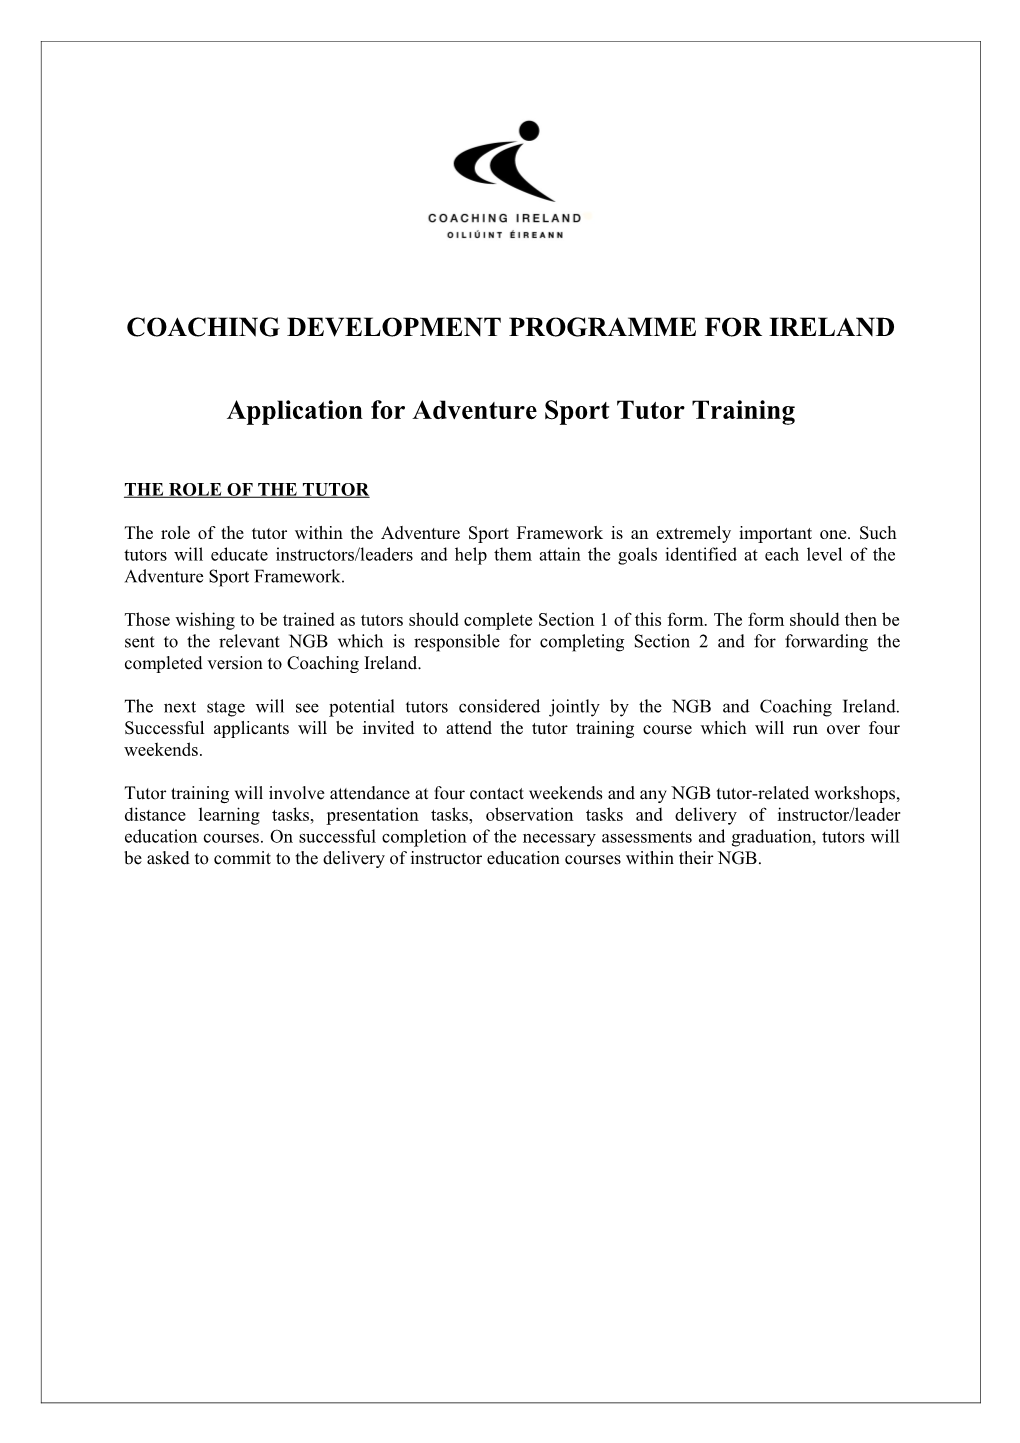 Coaching Development Programme for Ireland